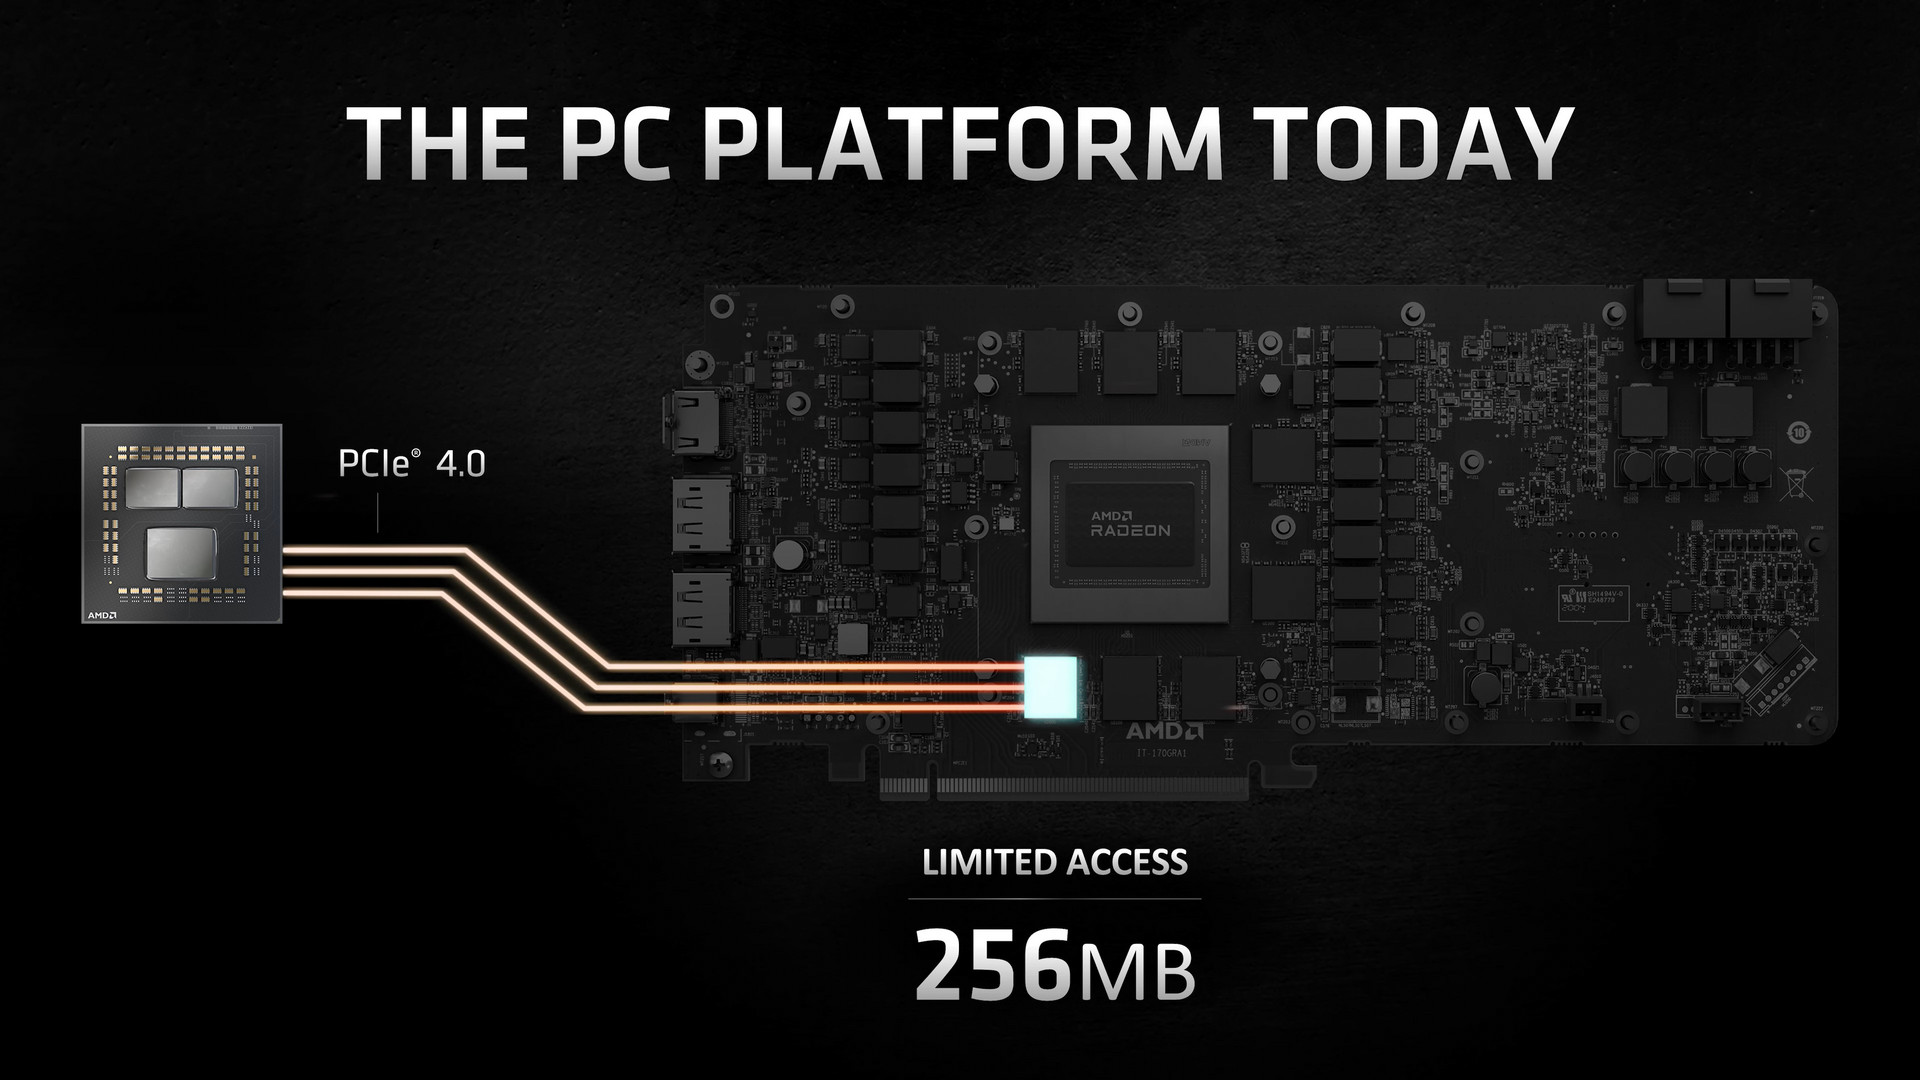 AMD Smart Access memory